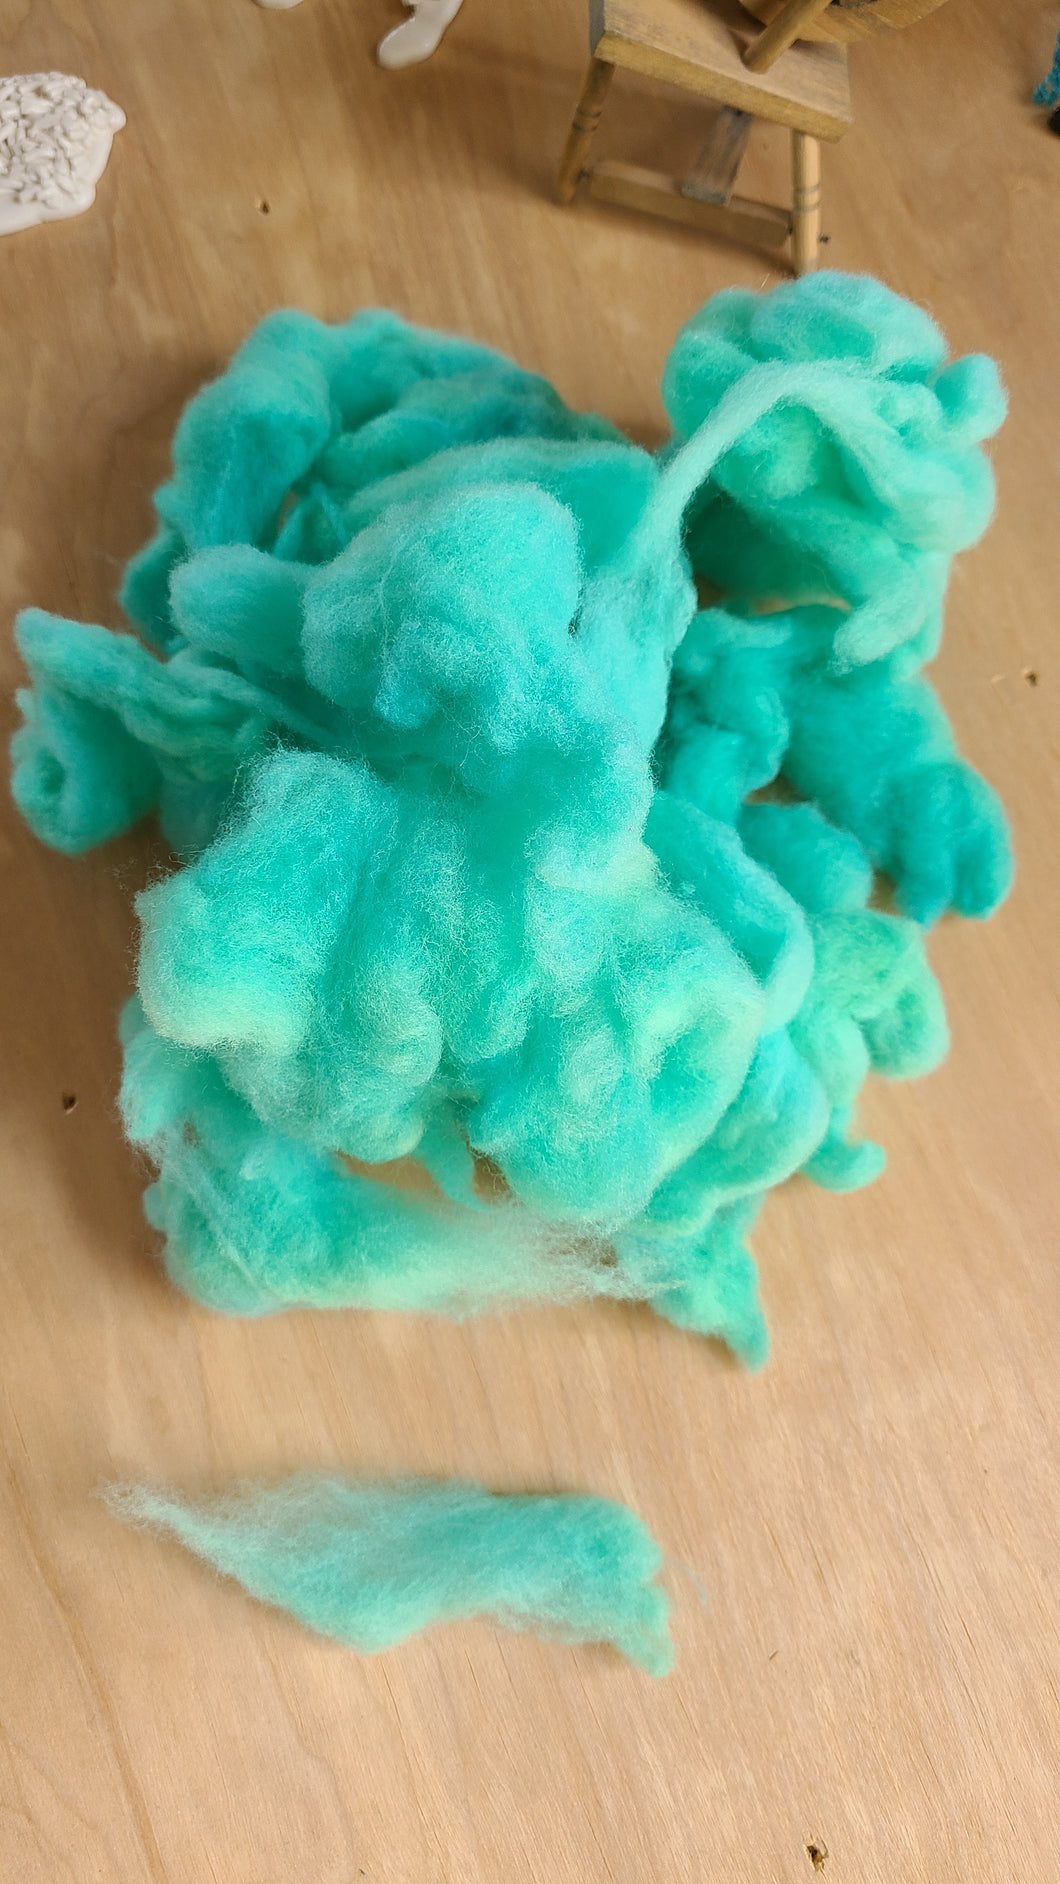 Hand-dyed loose 21 micron wool - 2oz